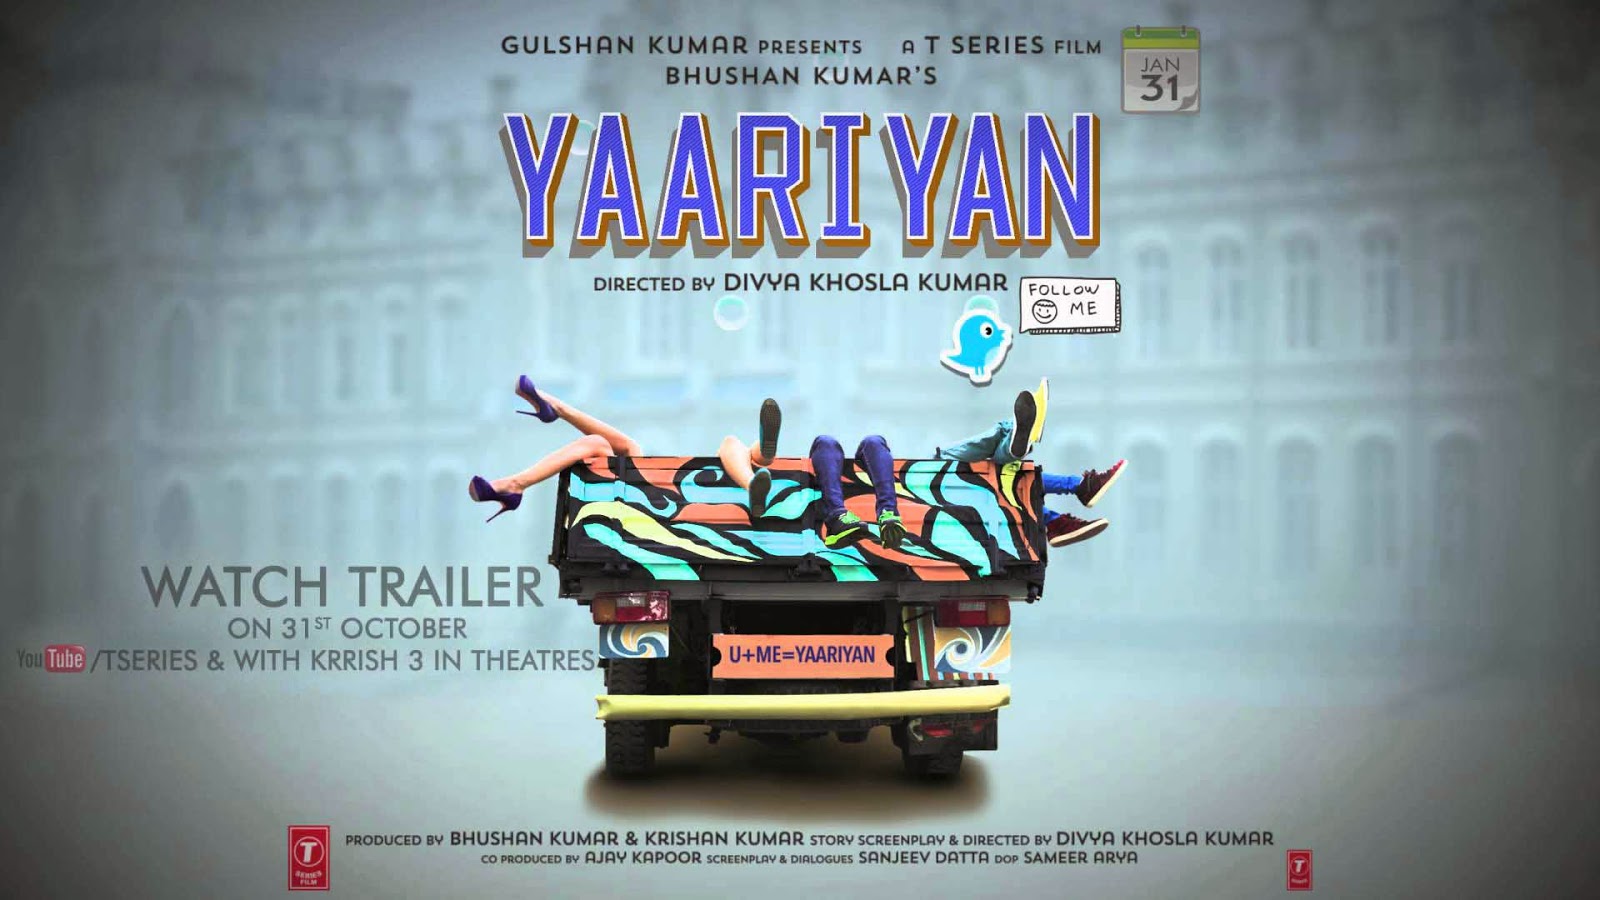 Download Full Movie Yaariyan In 720p